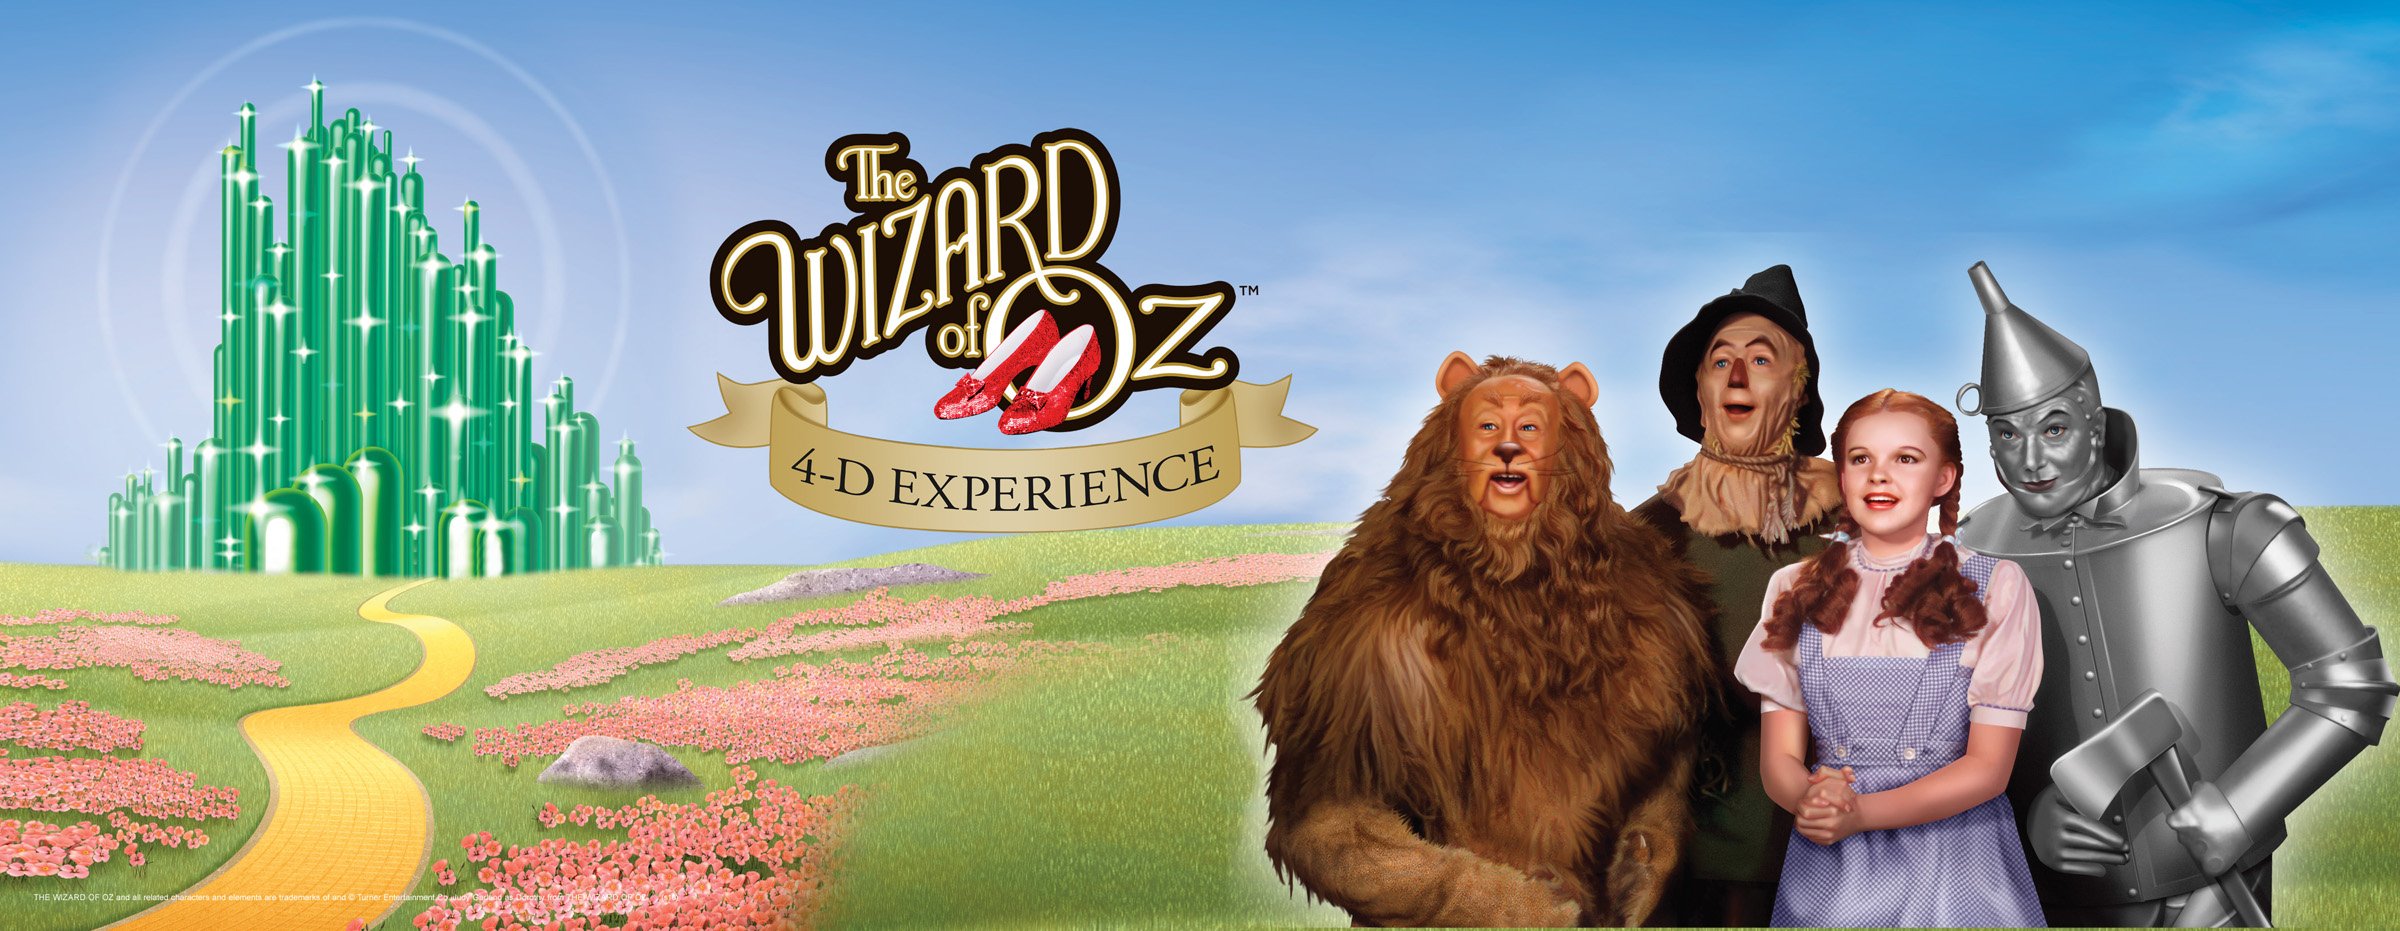 Family Fantasy Movie Film Wizard Of Oz Wallpaper Background